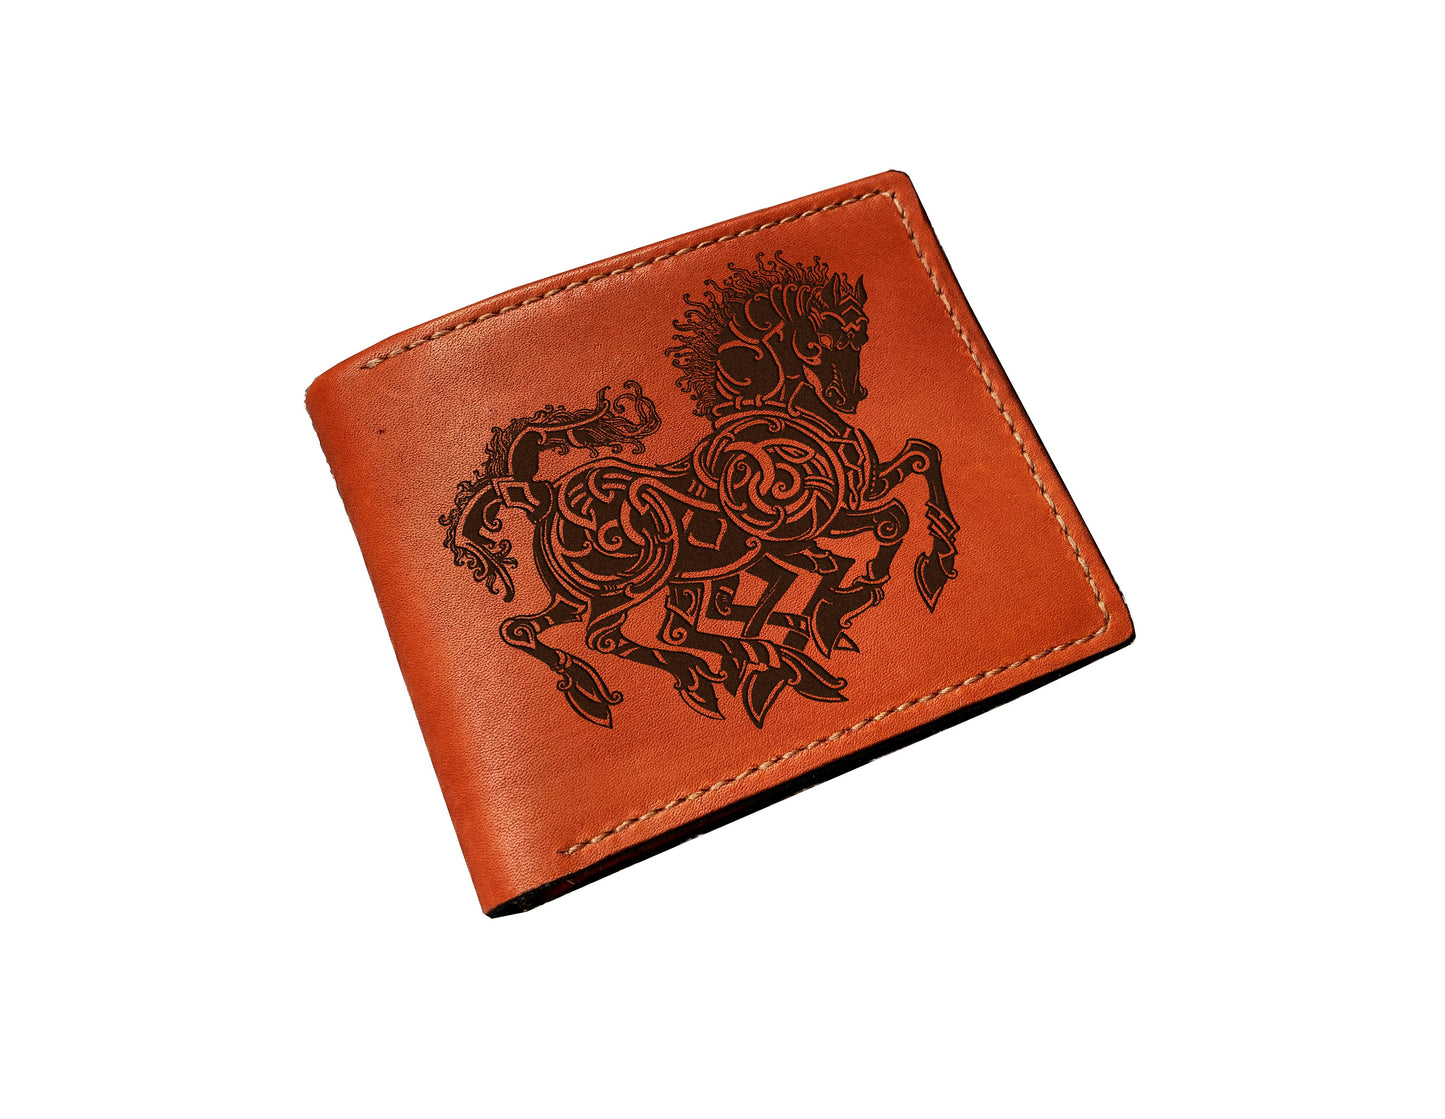 Sleipnir Odin's Steed leather men's wallet, customized men's gift, Norse Viking symbols wallet